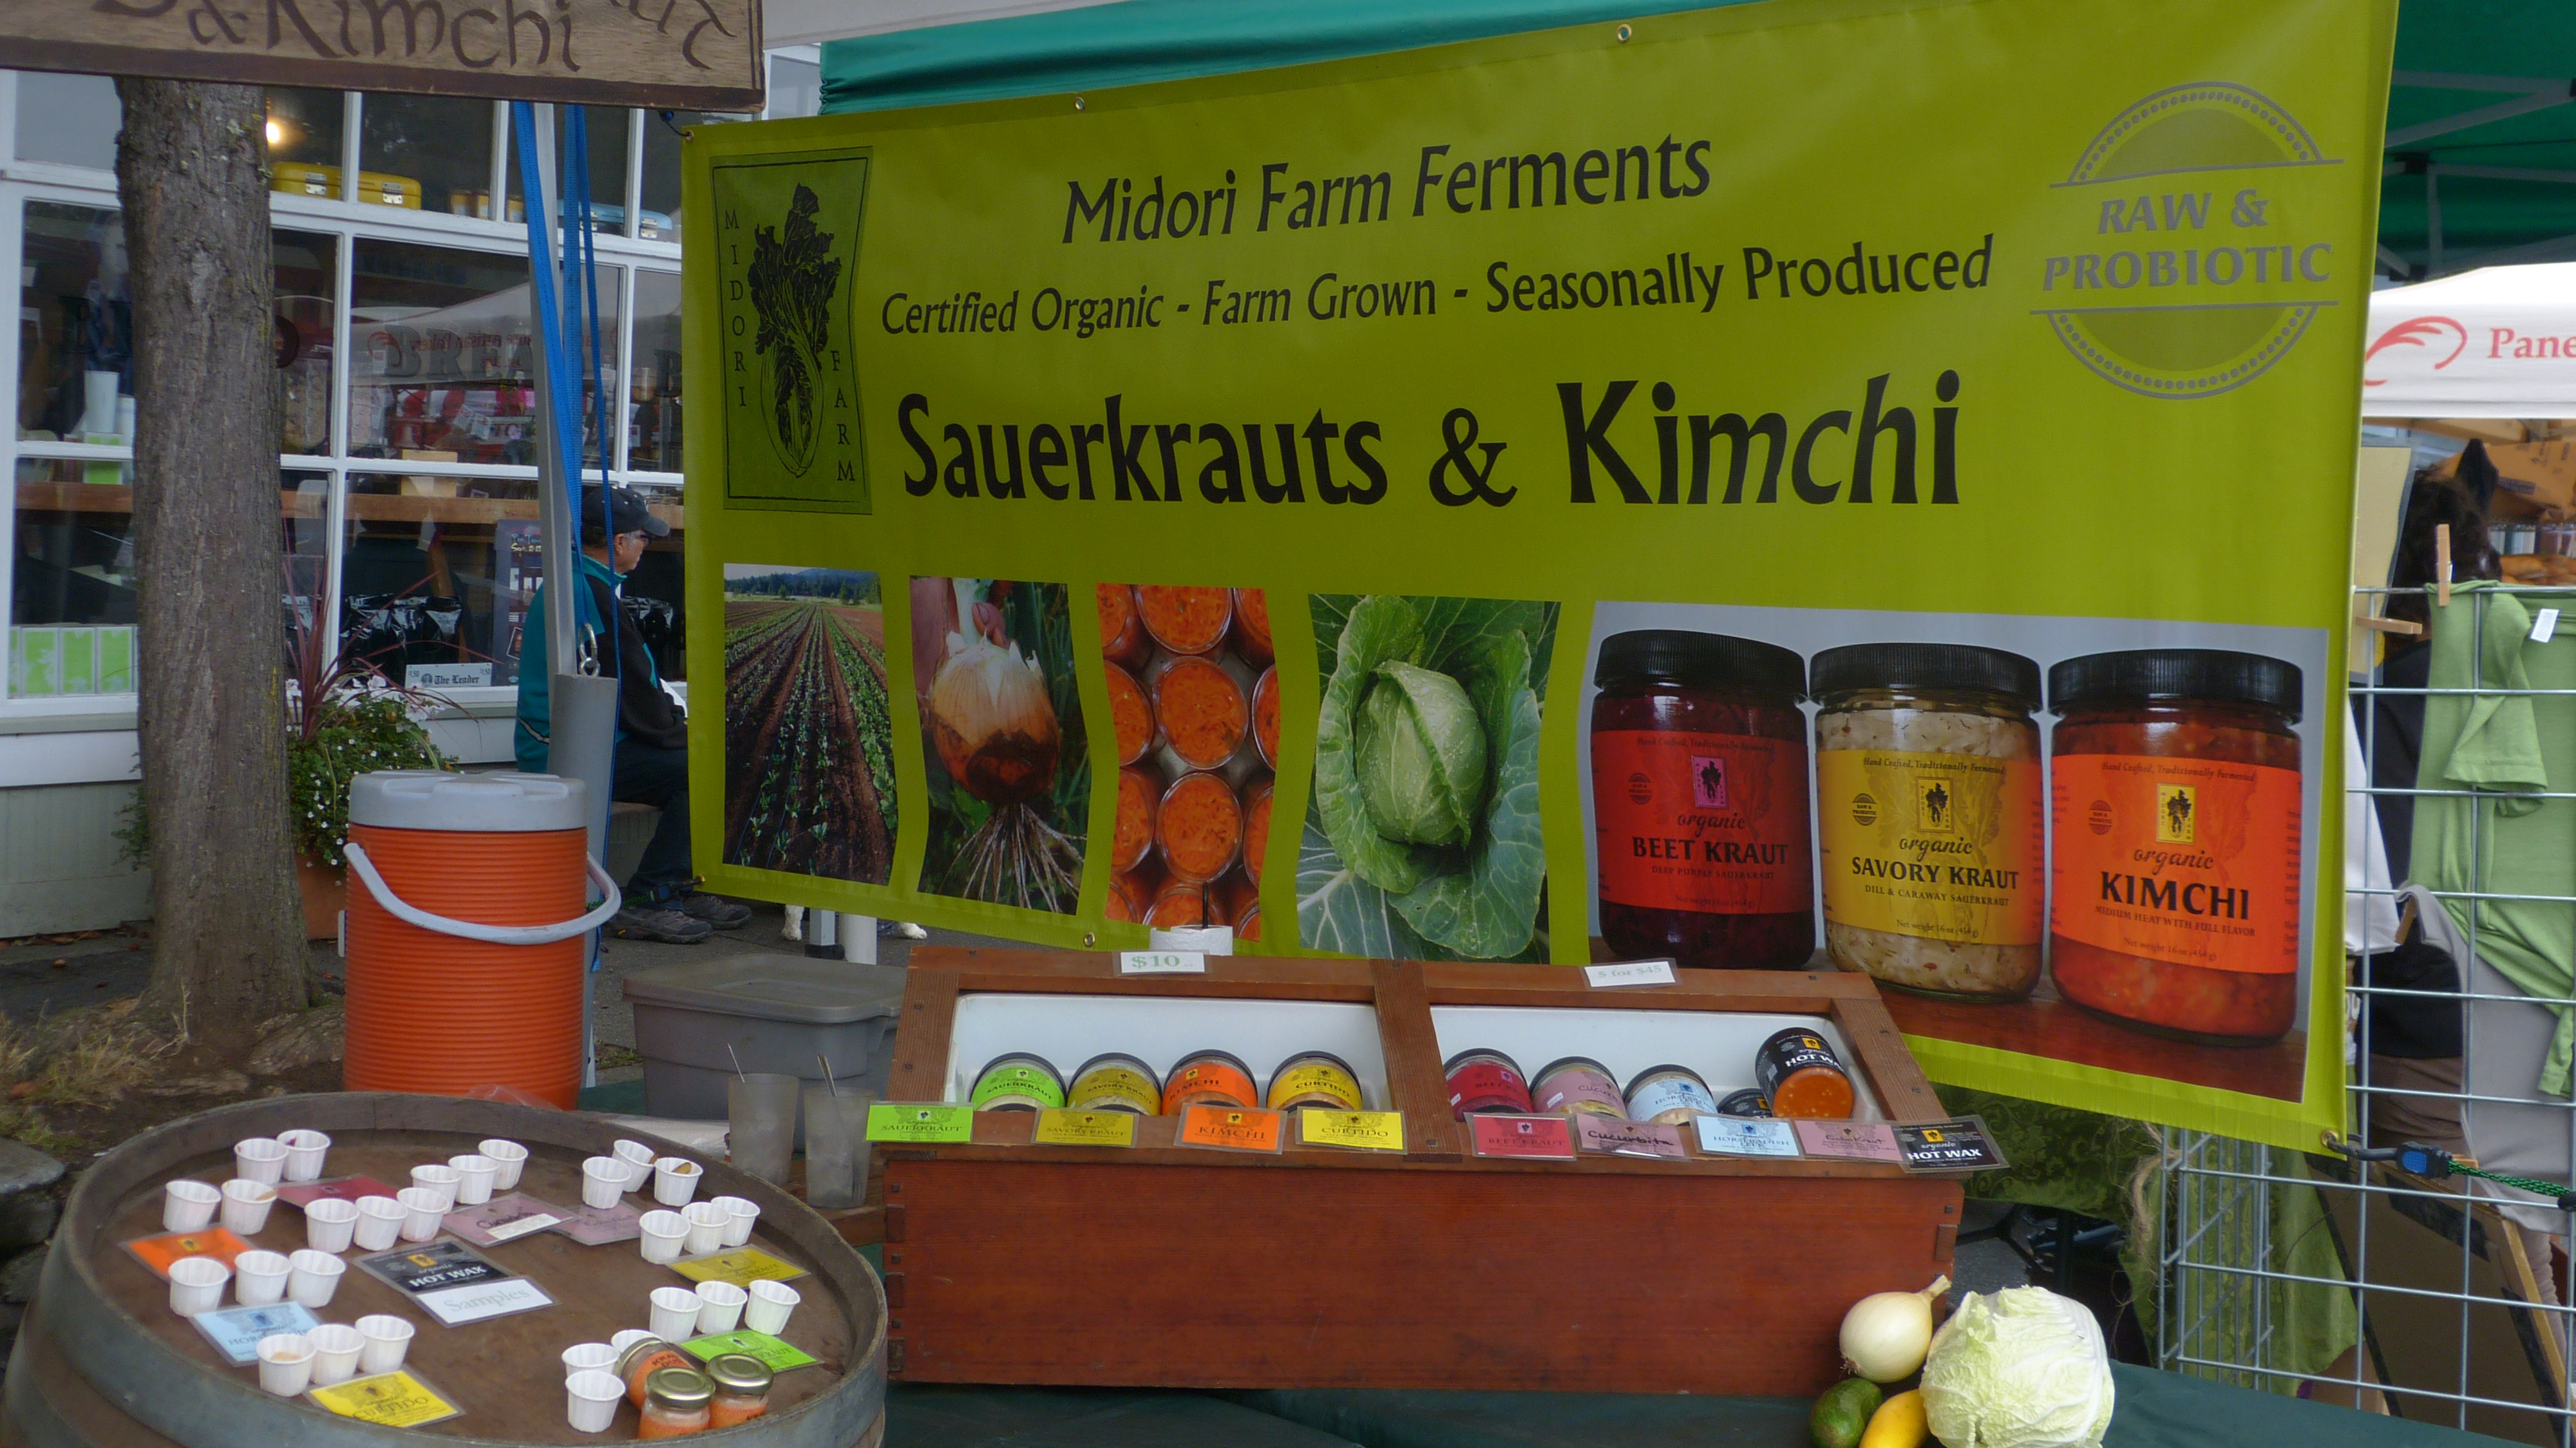 Farmer's Market stall with Midori Farms Sauerkrauts and Kimchi.